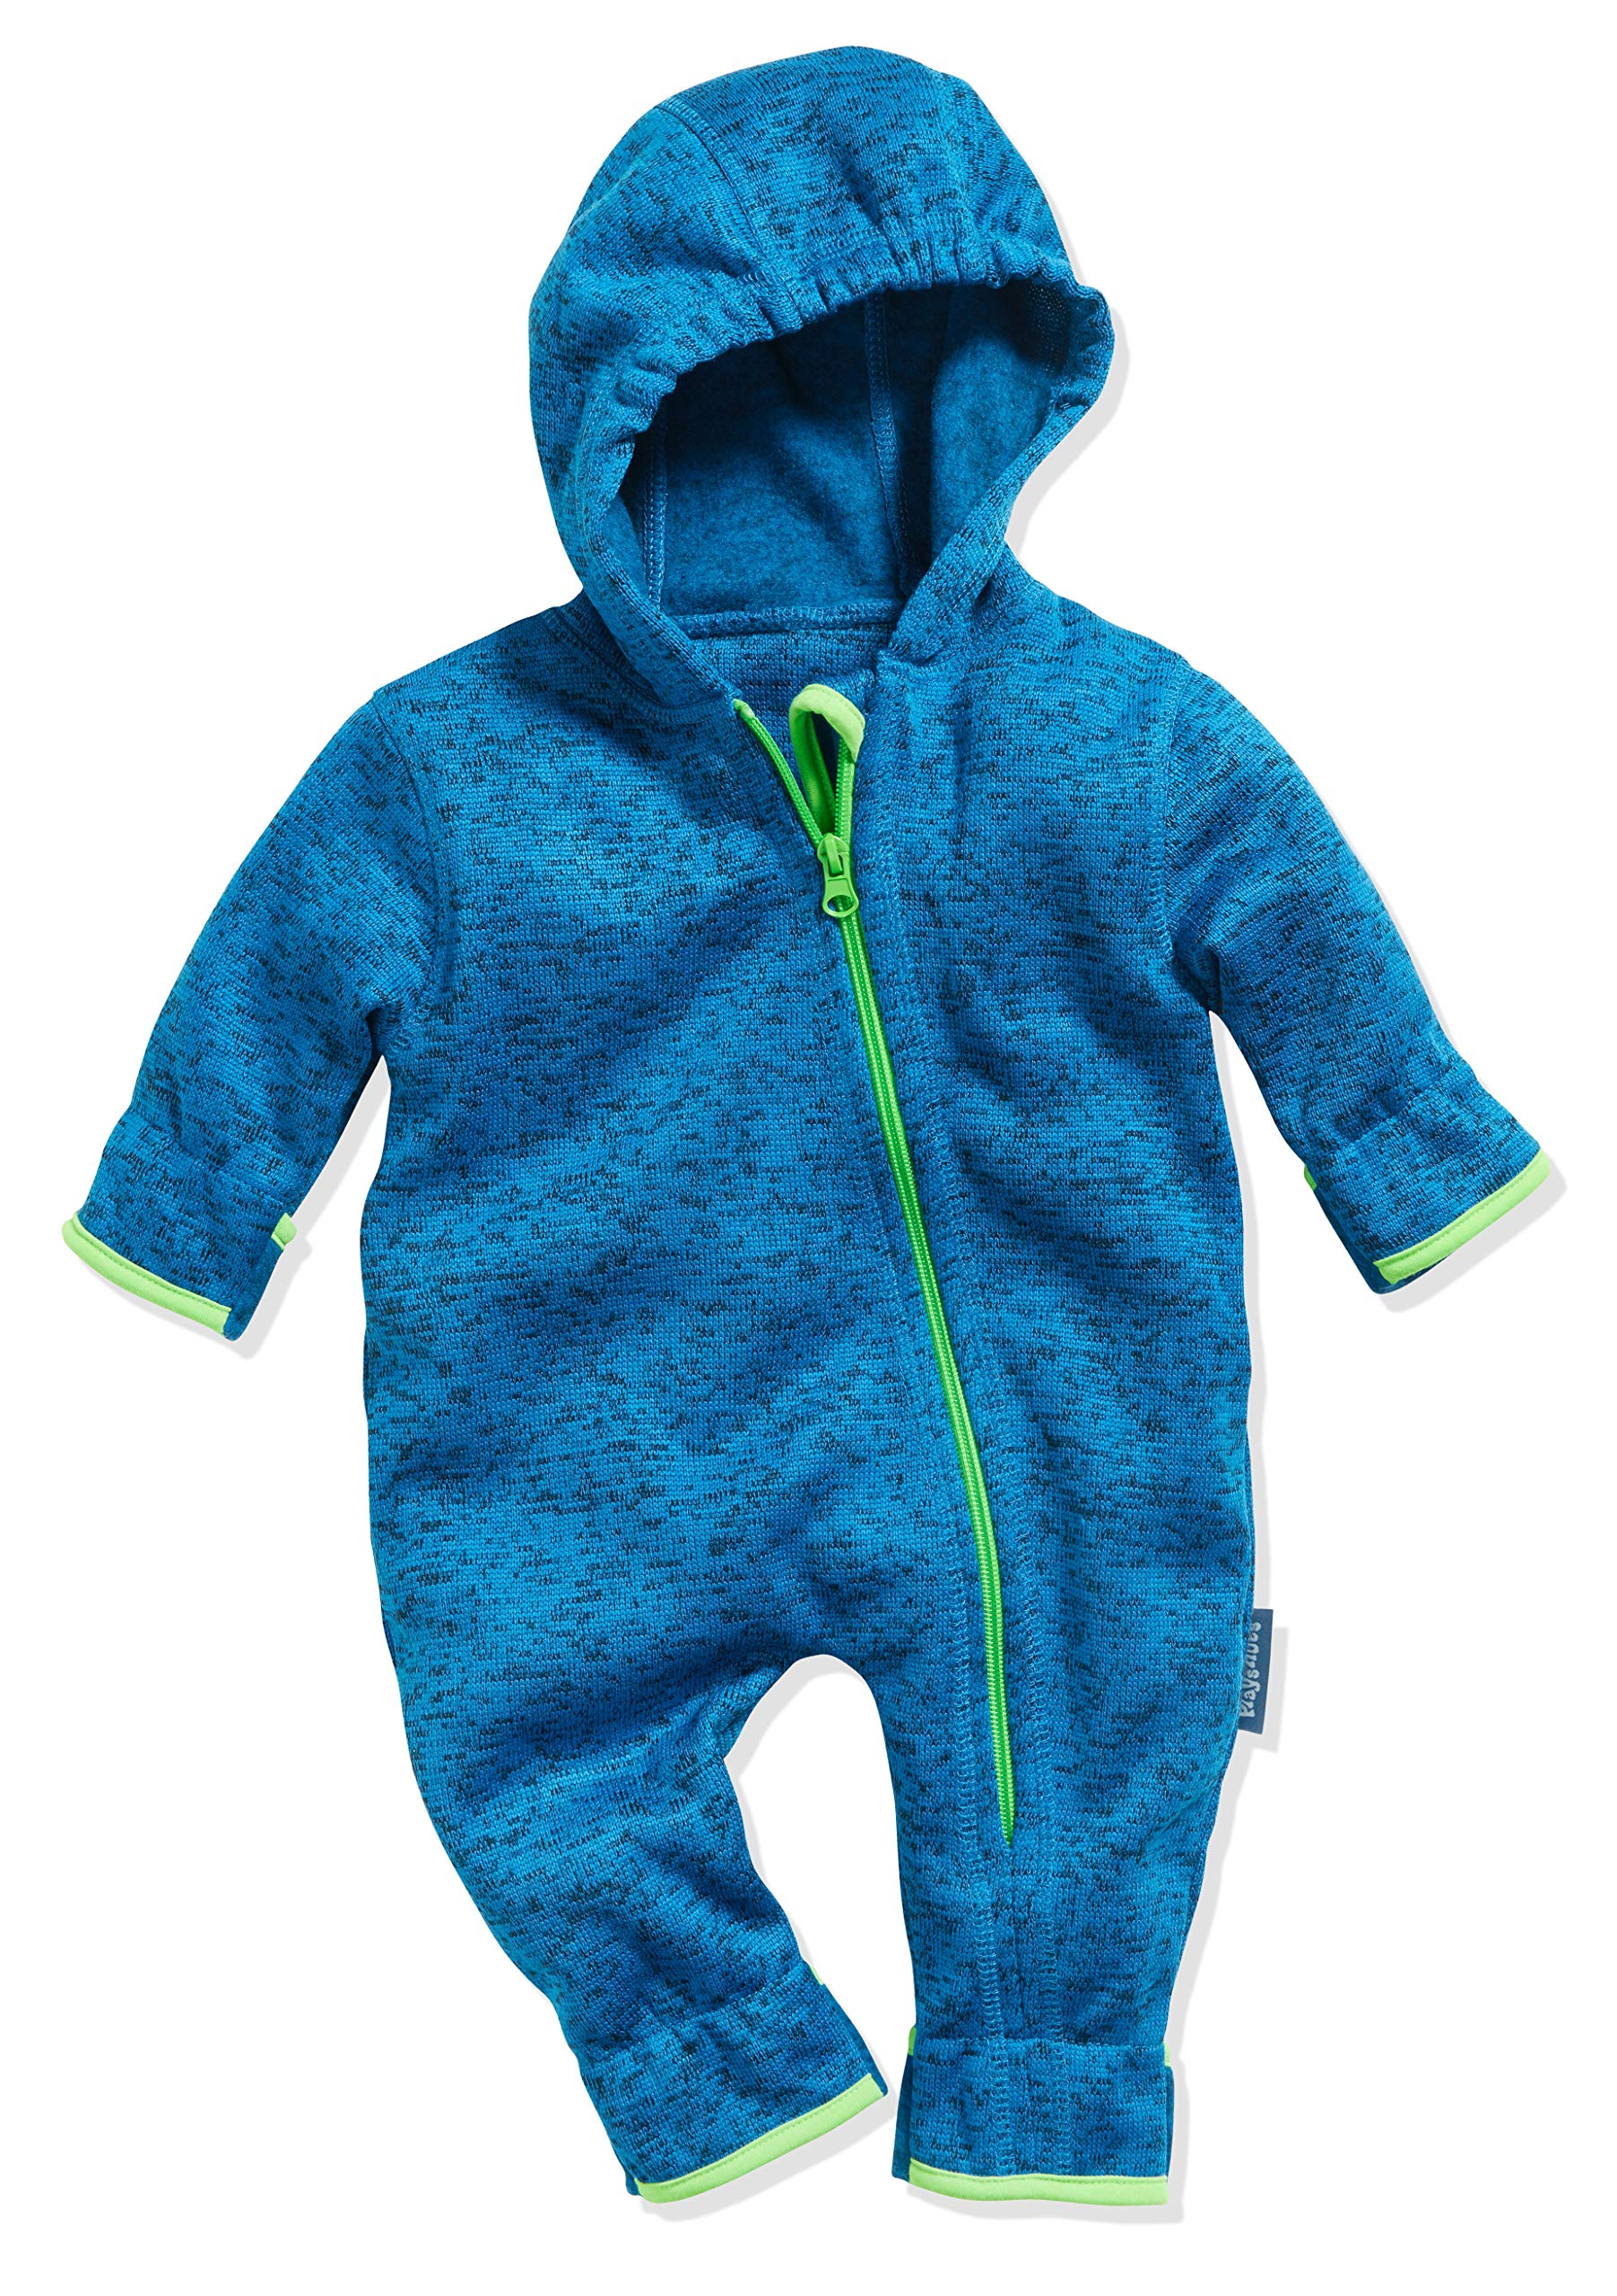 Playshoes Unisex Kinder Fleece-Overall Jumpsuit, blau Strickfleece, 68